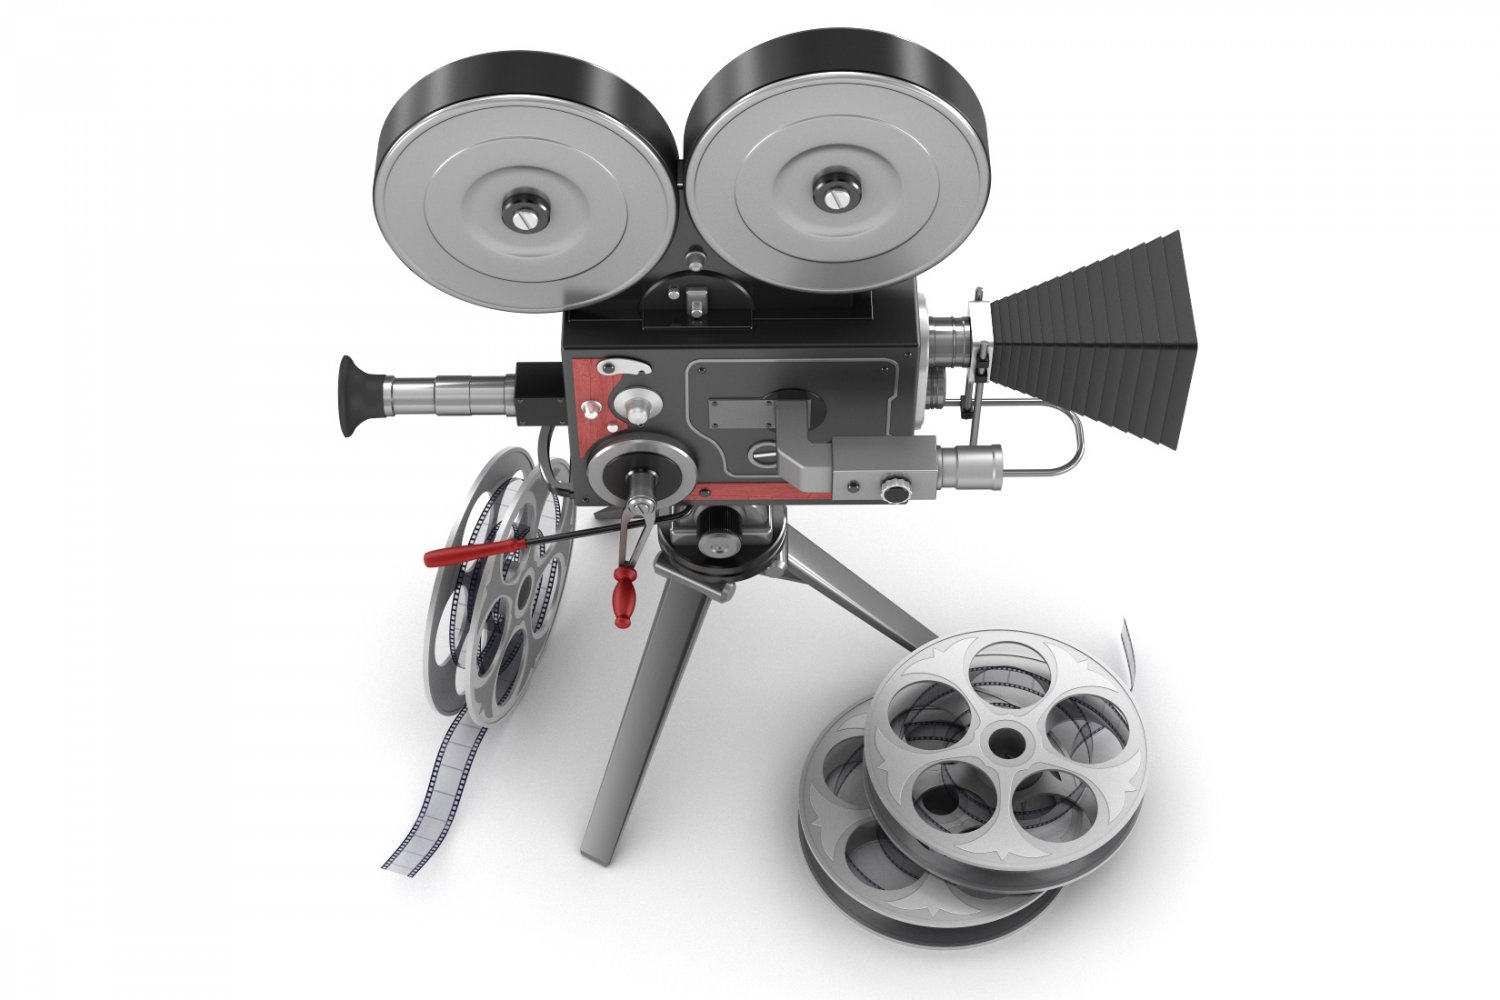 Old Fashioned Movie Camera 3D Model Photoshop | C4D FBX OBJ CGI